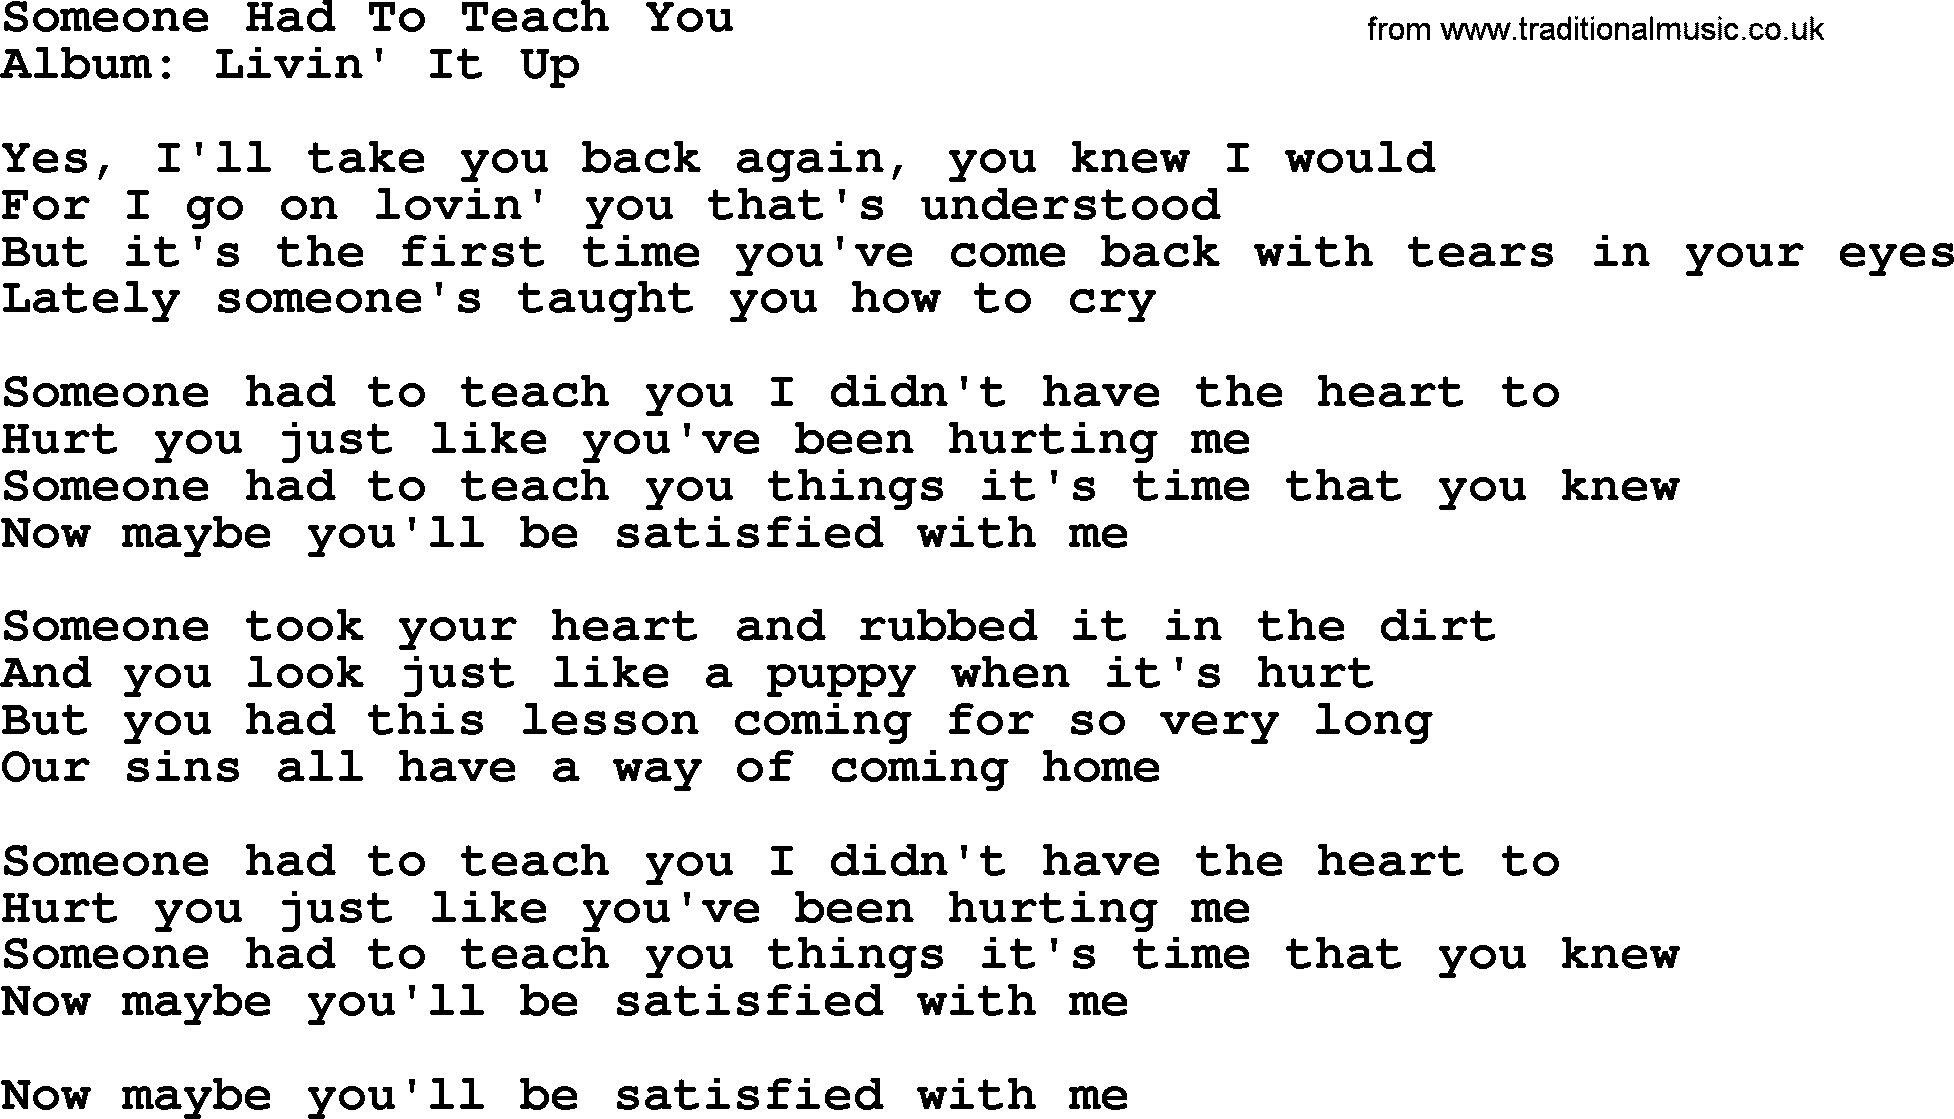 George Strait song: Someone Had To Teach You, lyrics